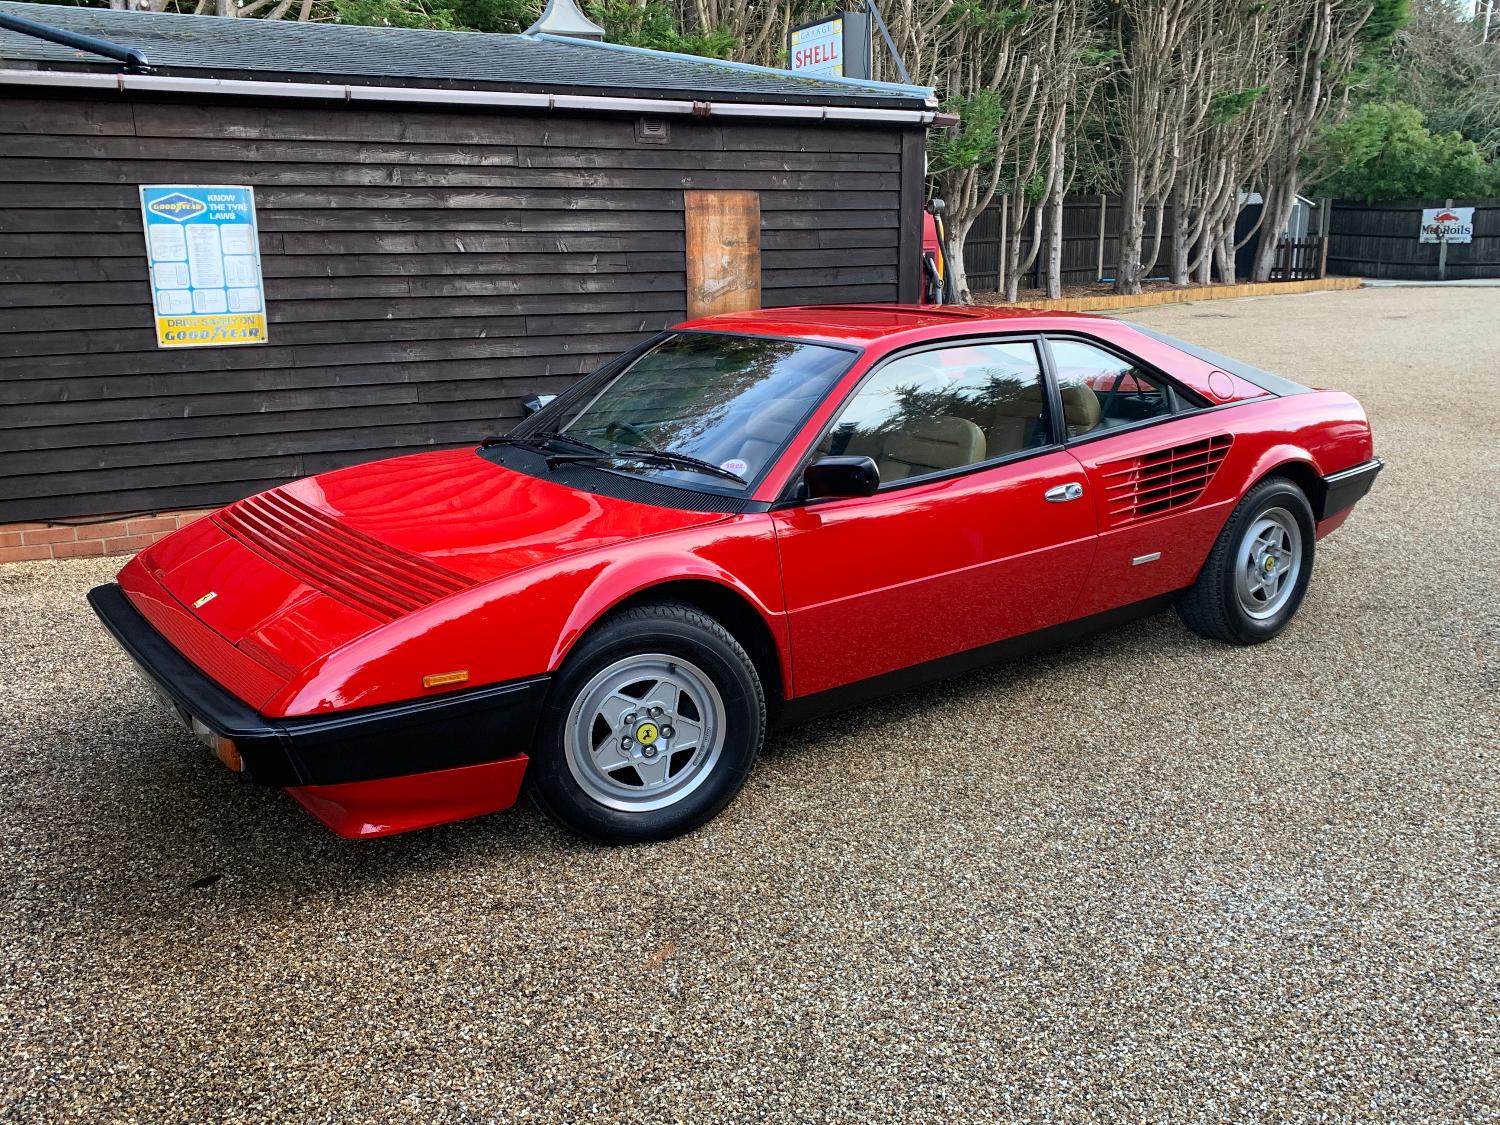 Say a little prayer for me – I bought a 1983 Ferrari Mondial QV